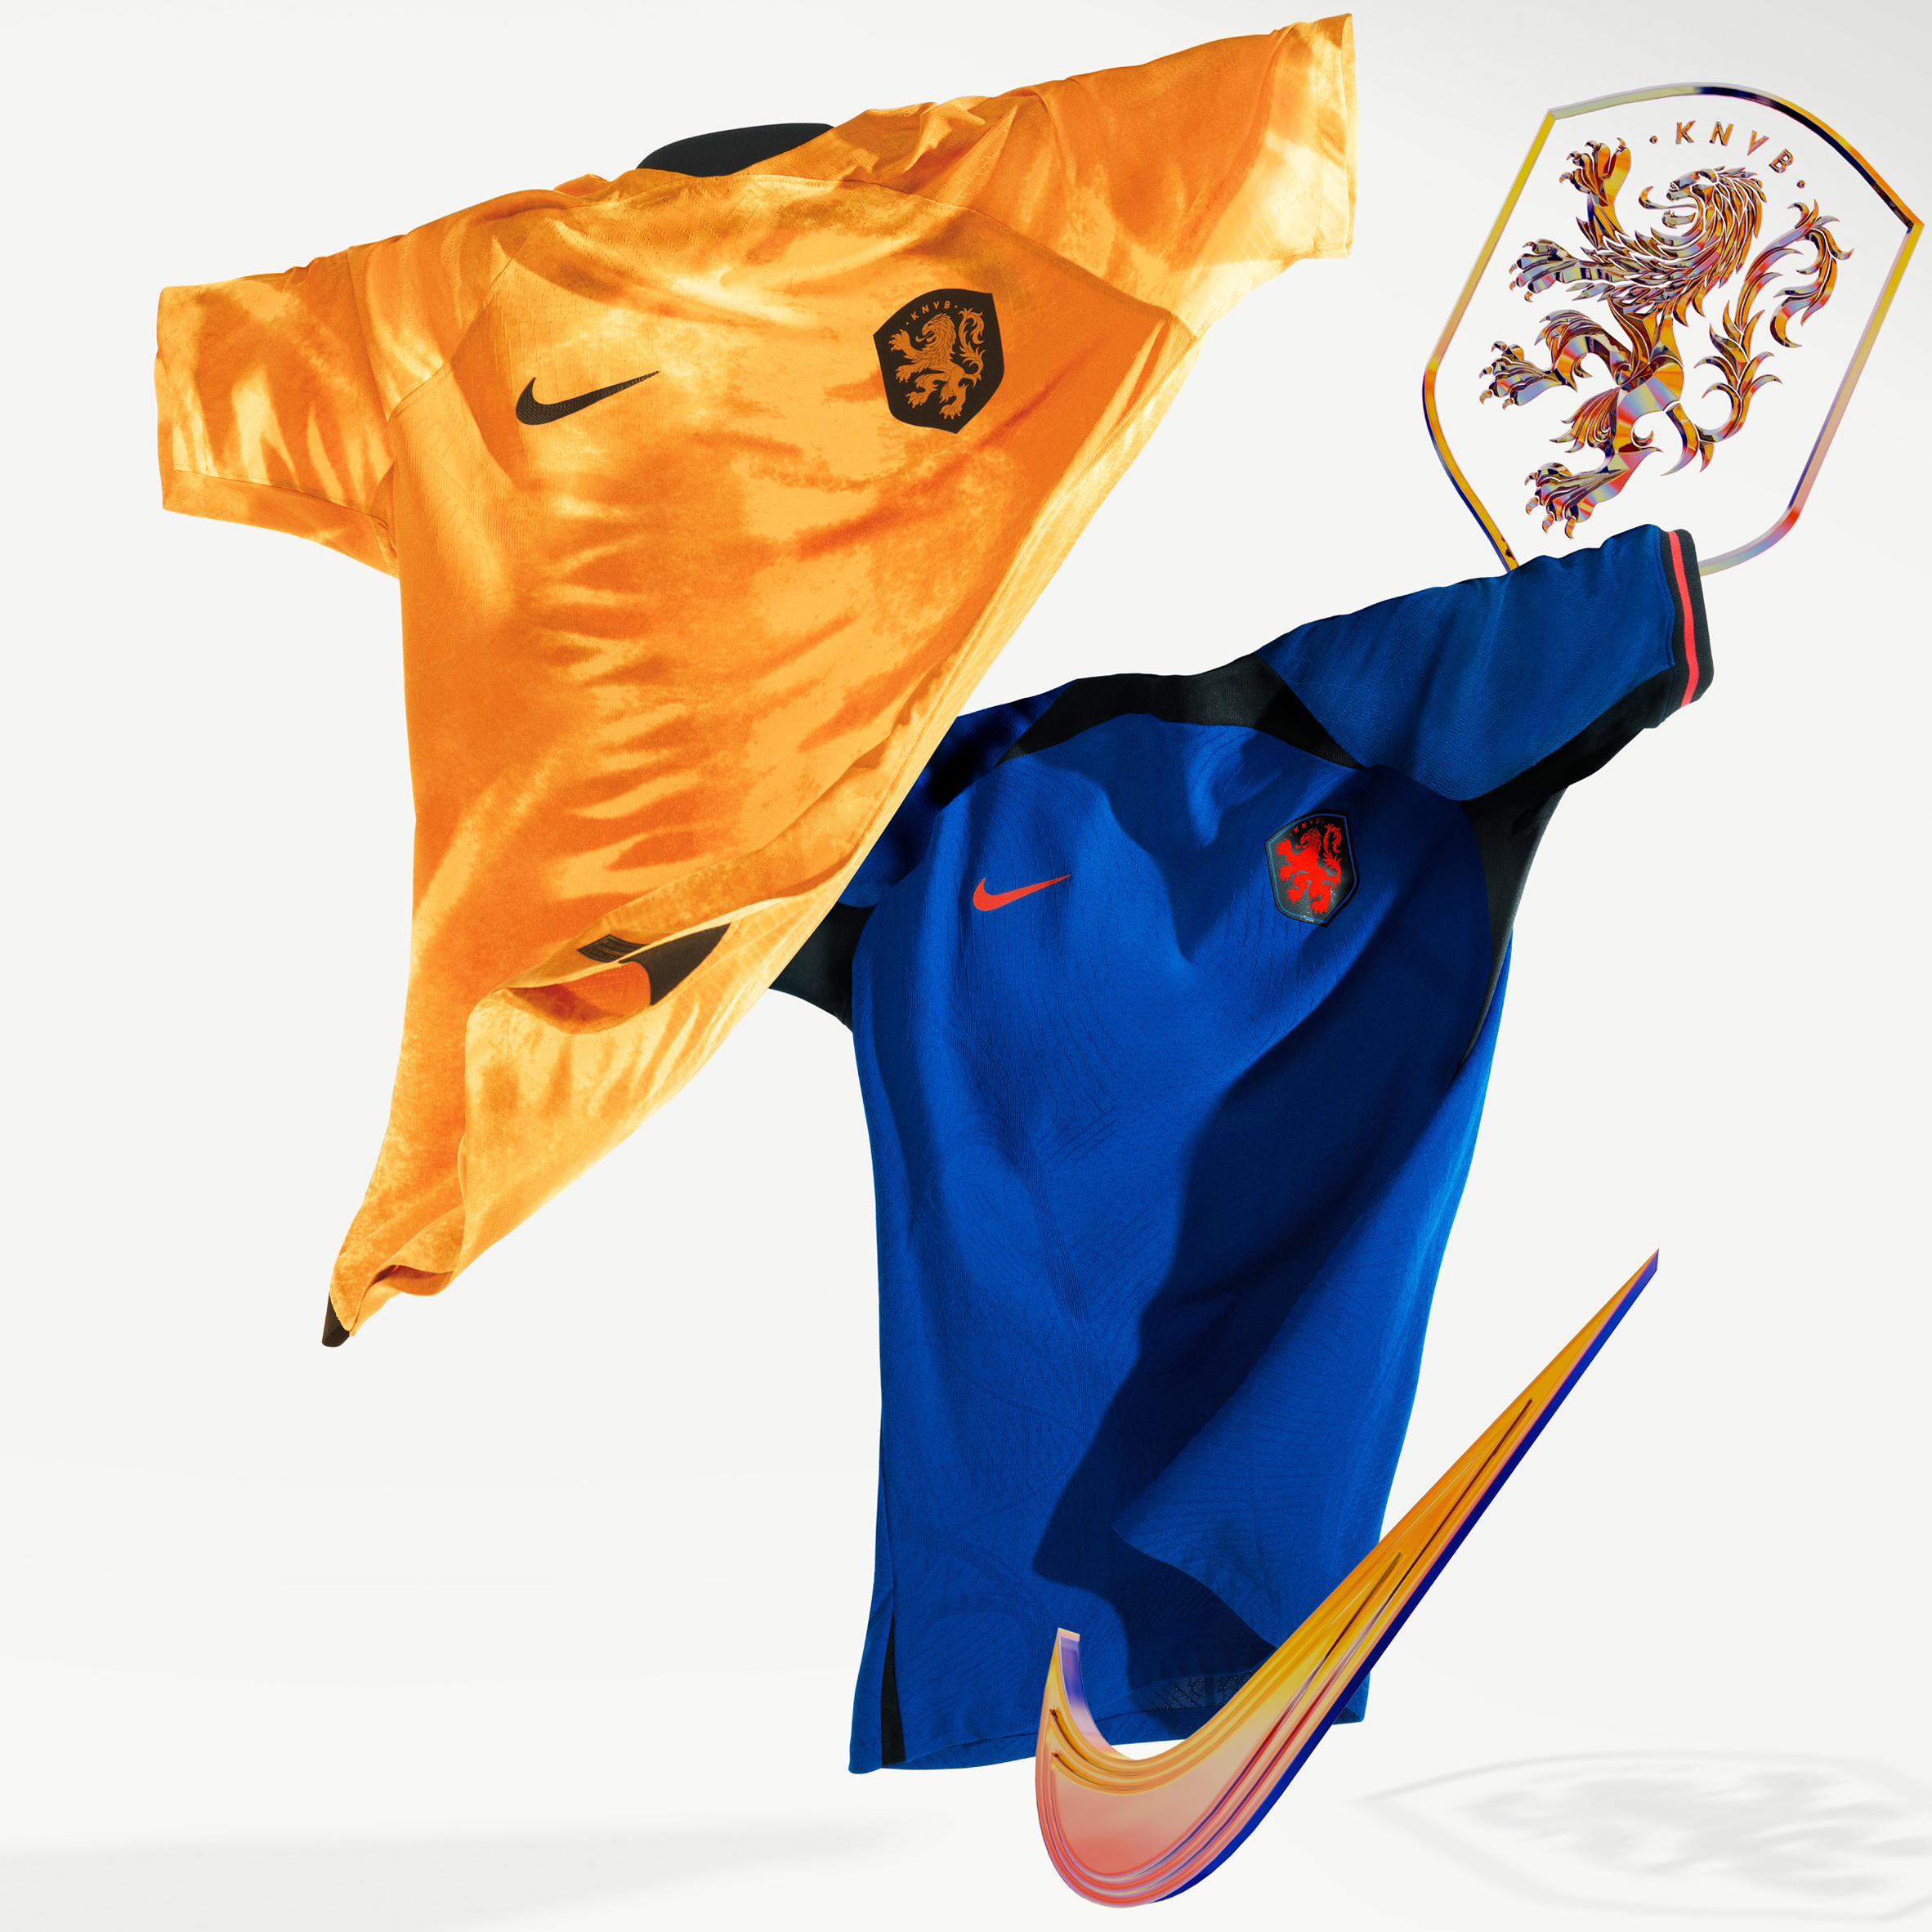 An orange and a blue football shirt